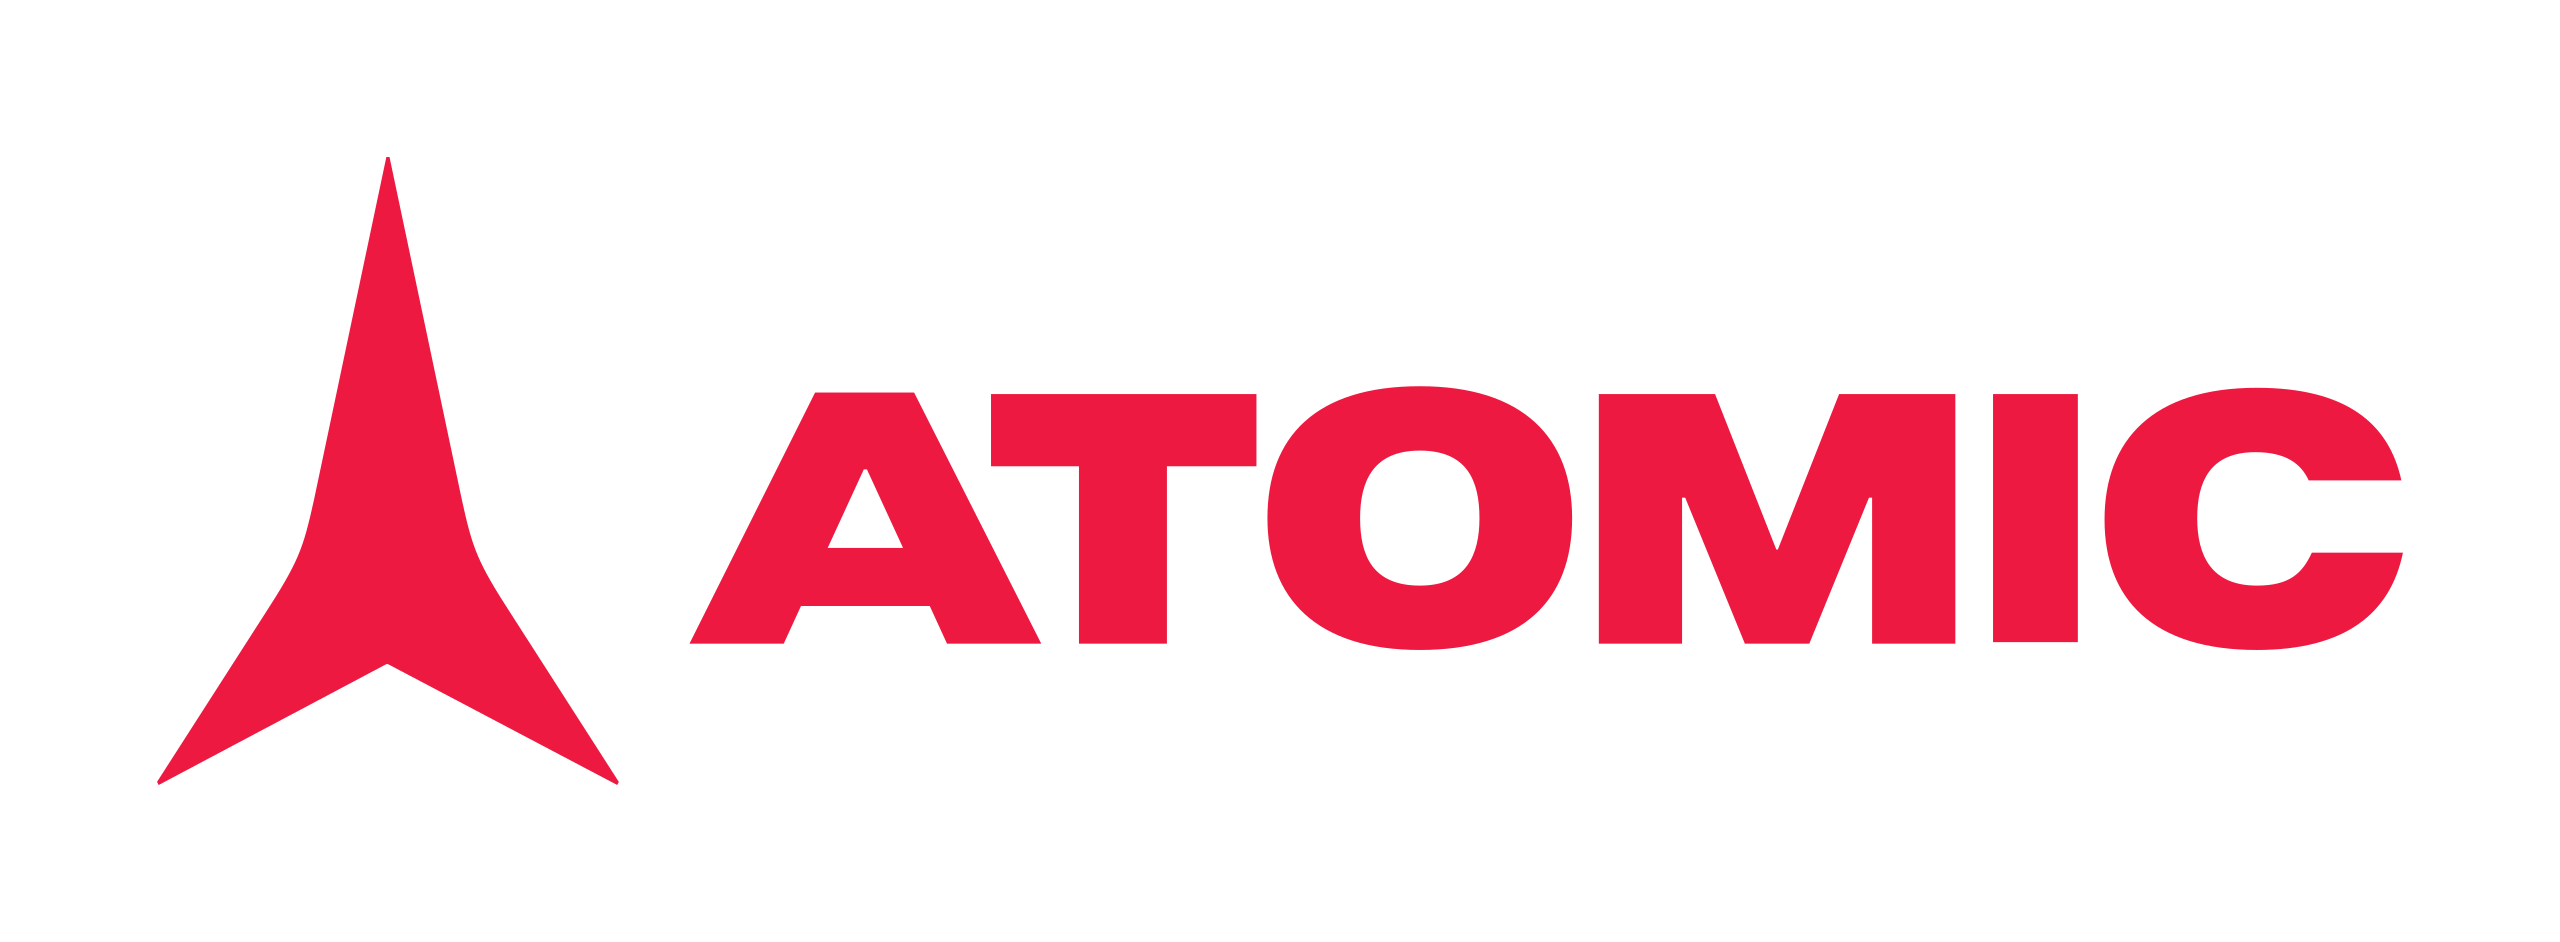 Atomic-logo.svg.png (53 KB)